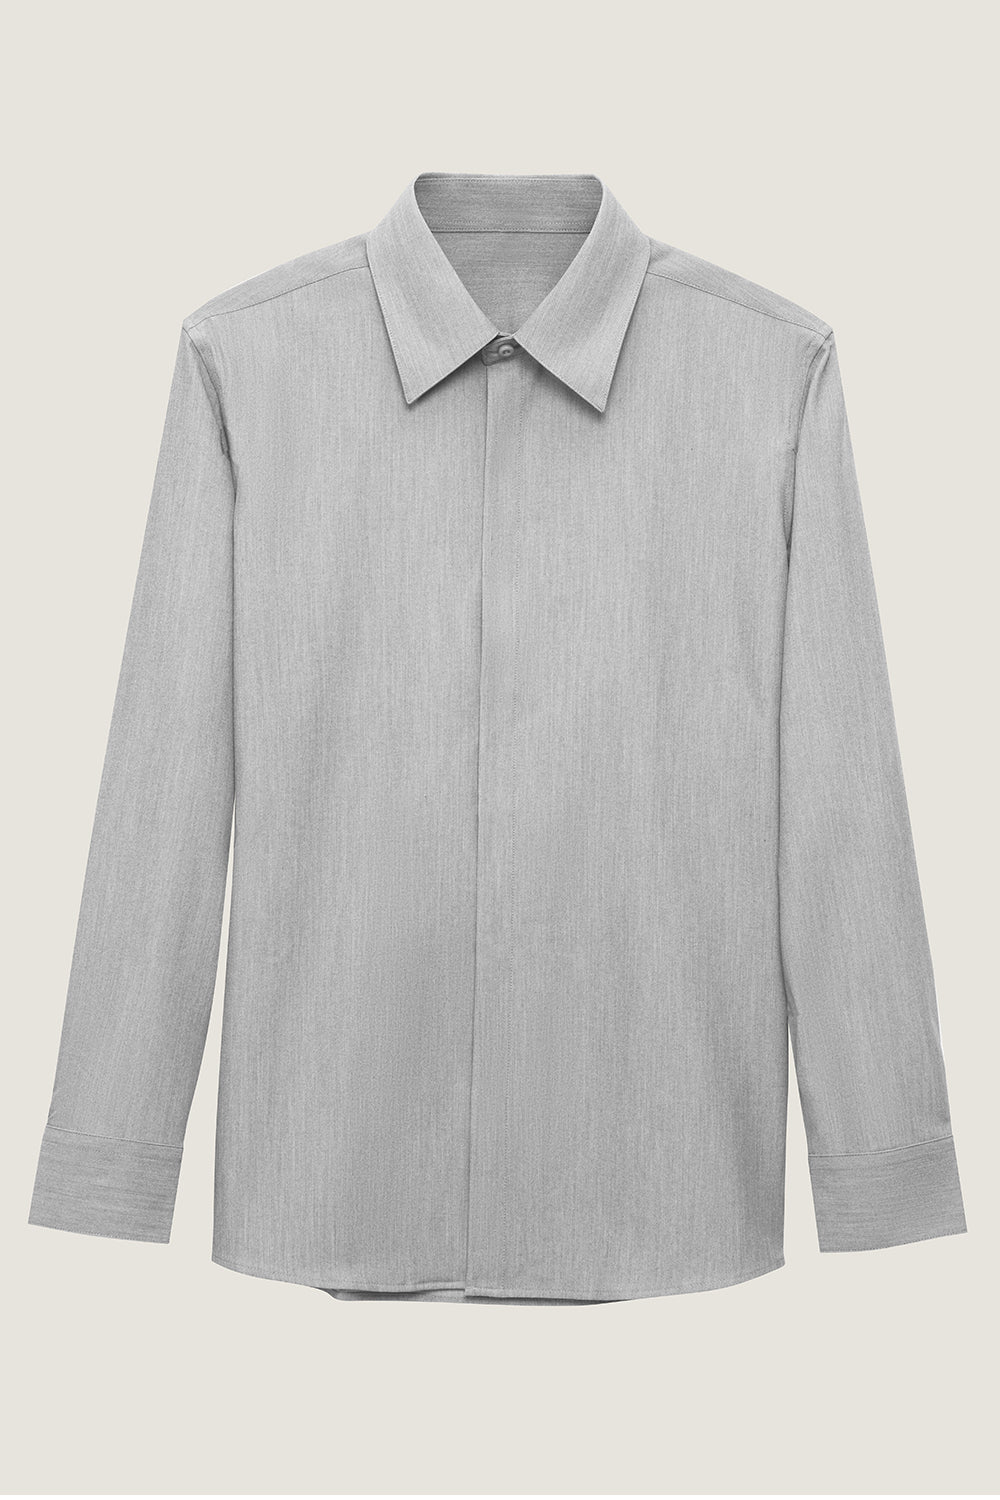 Grey Men's Suit Shirt